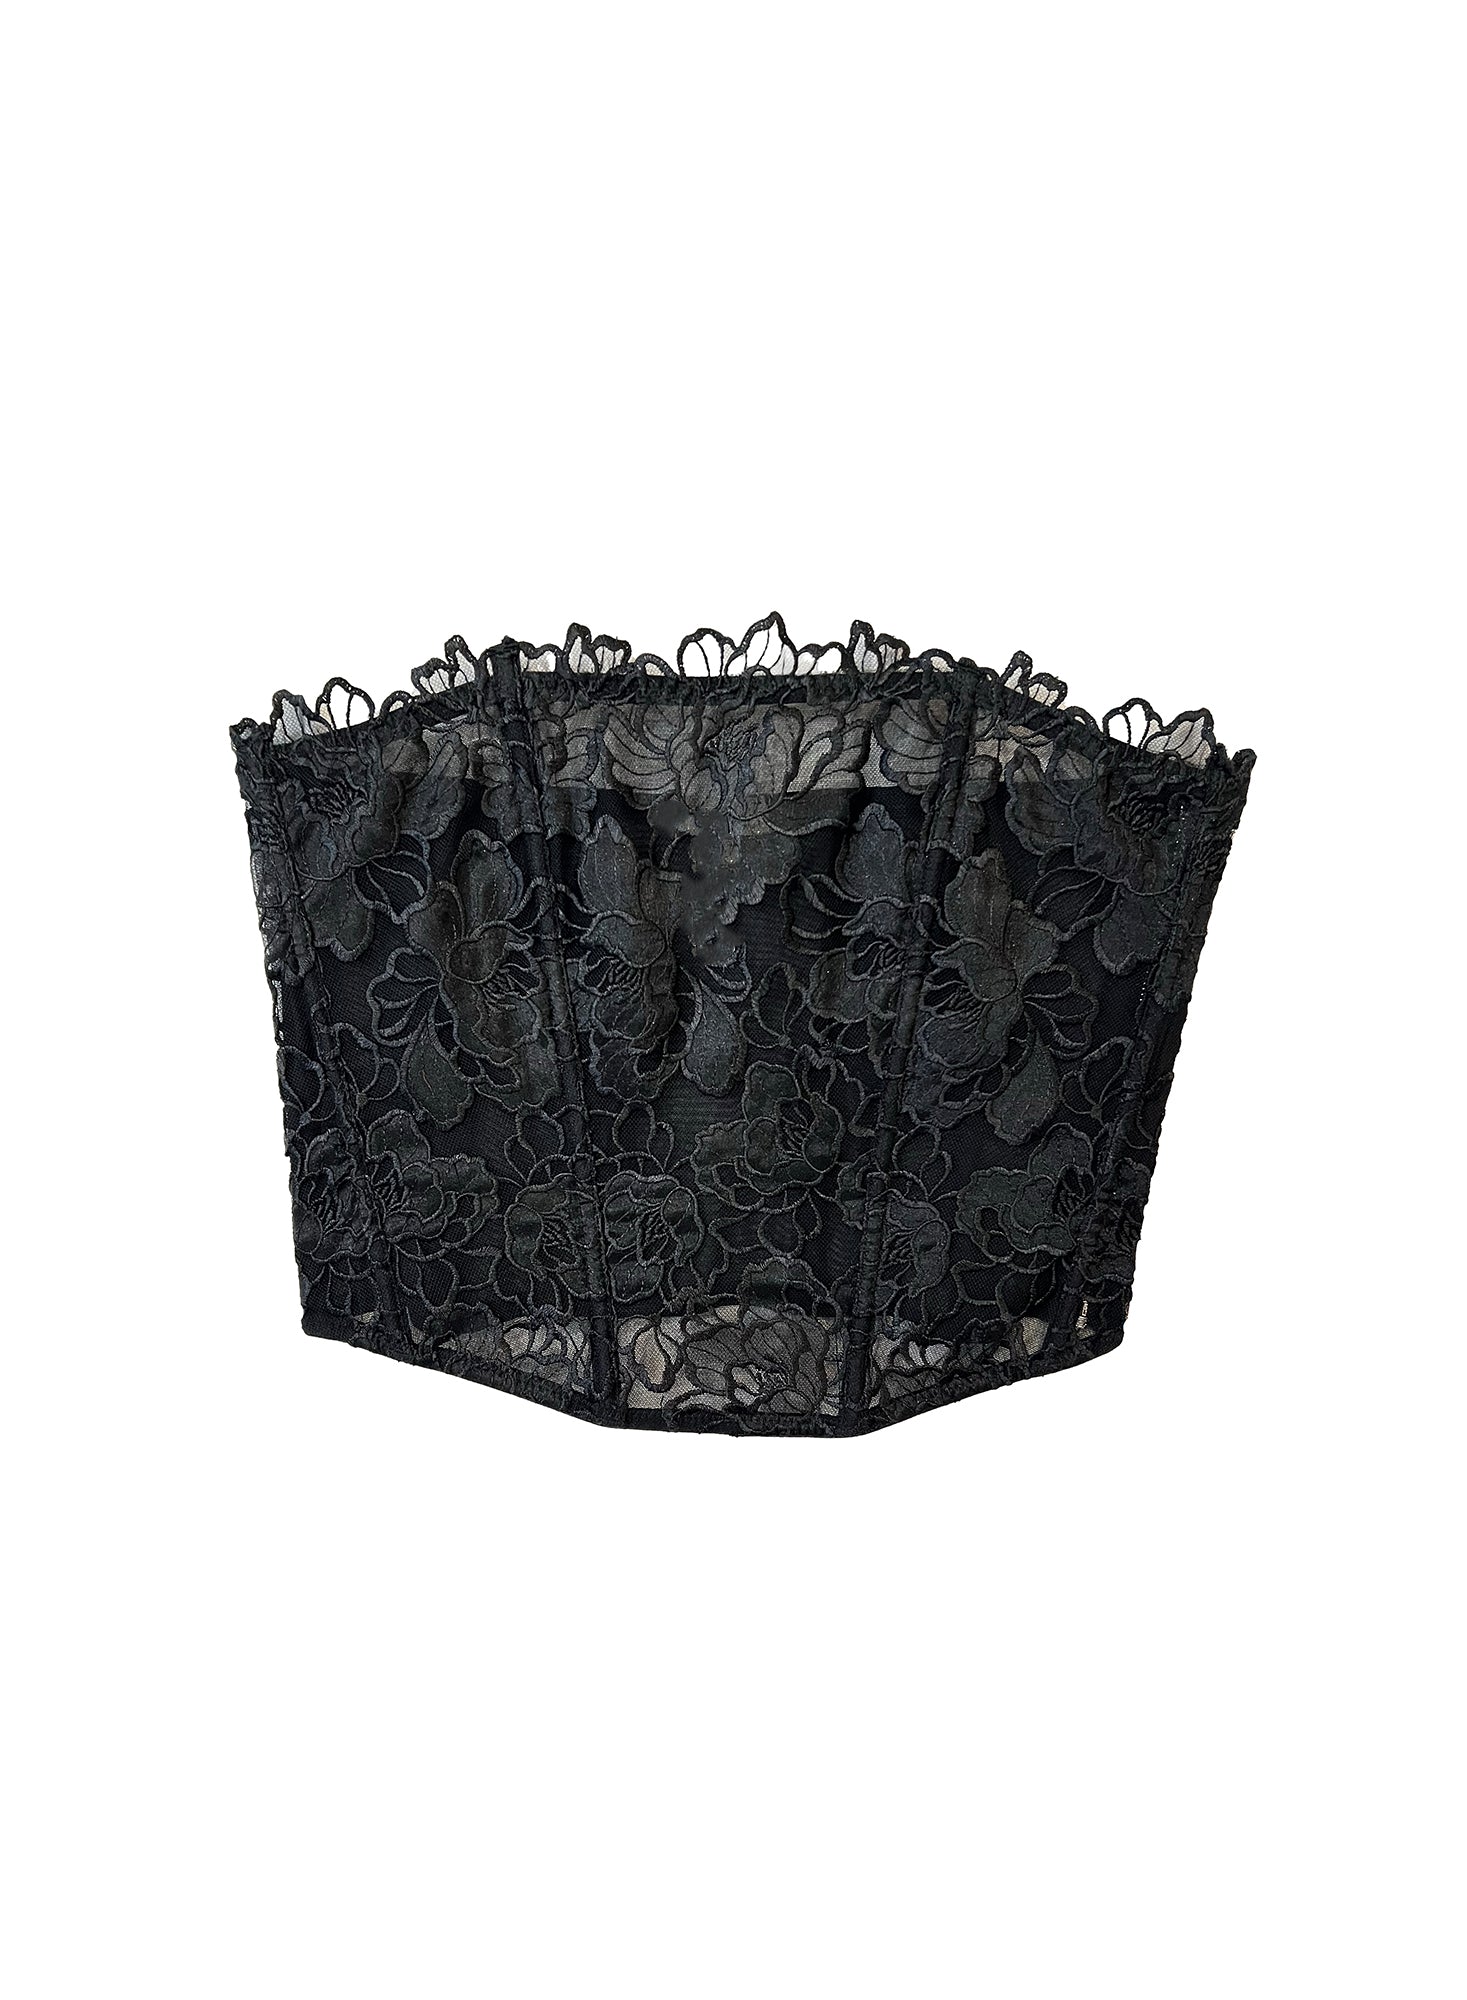 ASOS DESIGN Celia premium embroidery corset in black - ShopStyle Tops